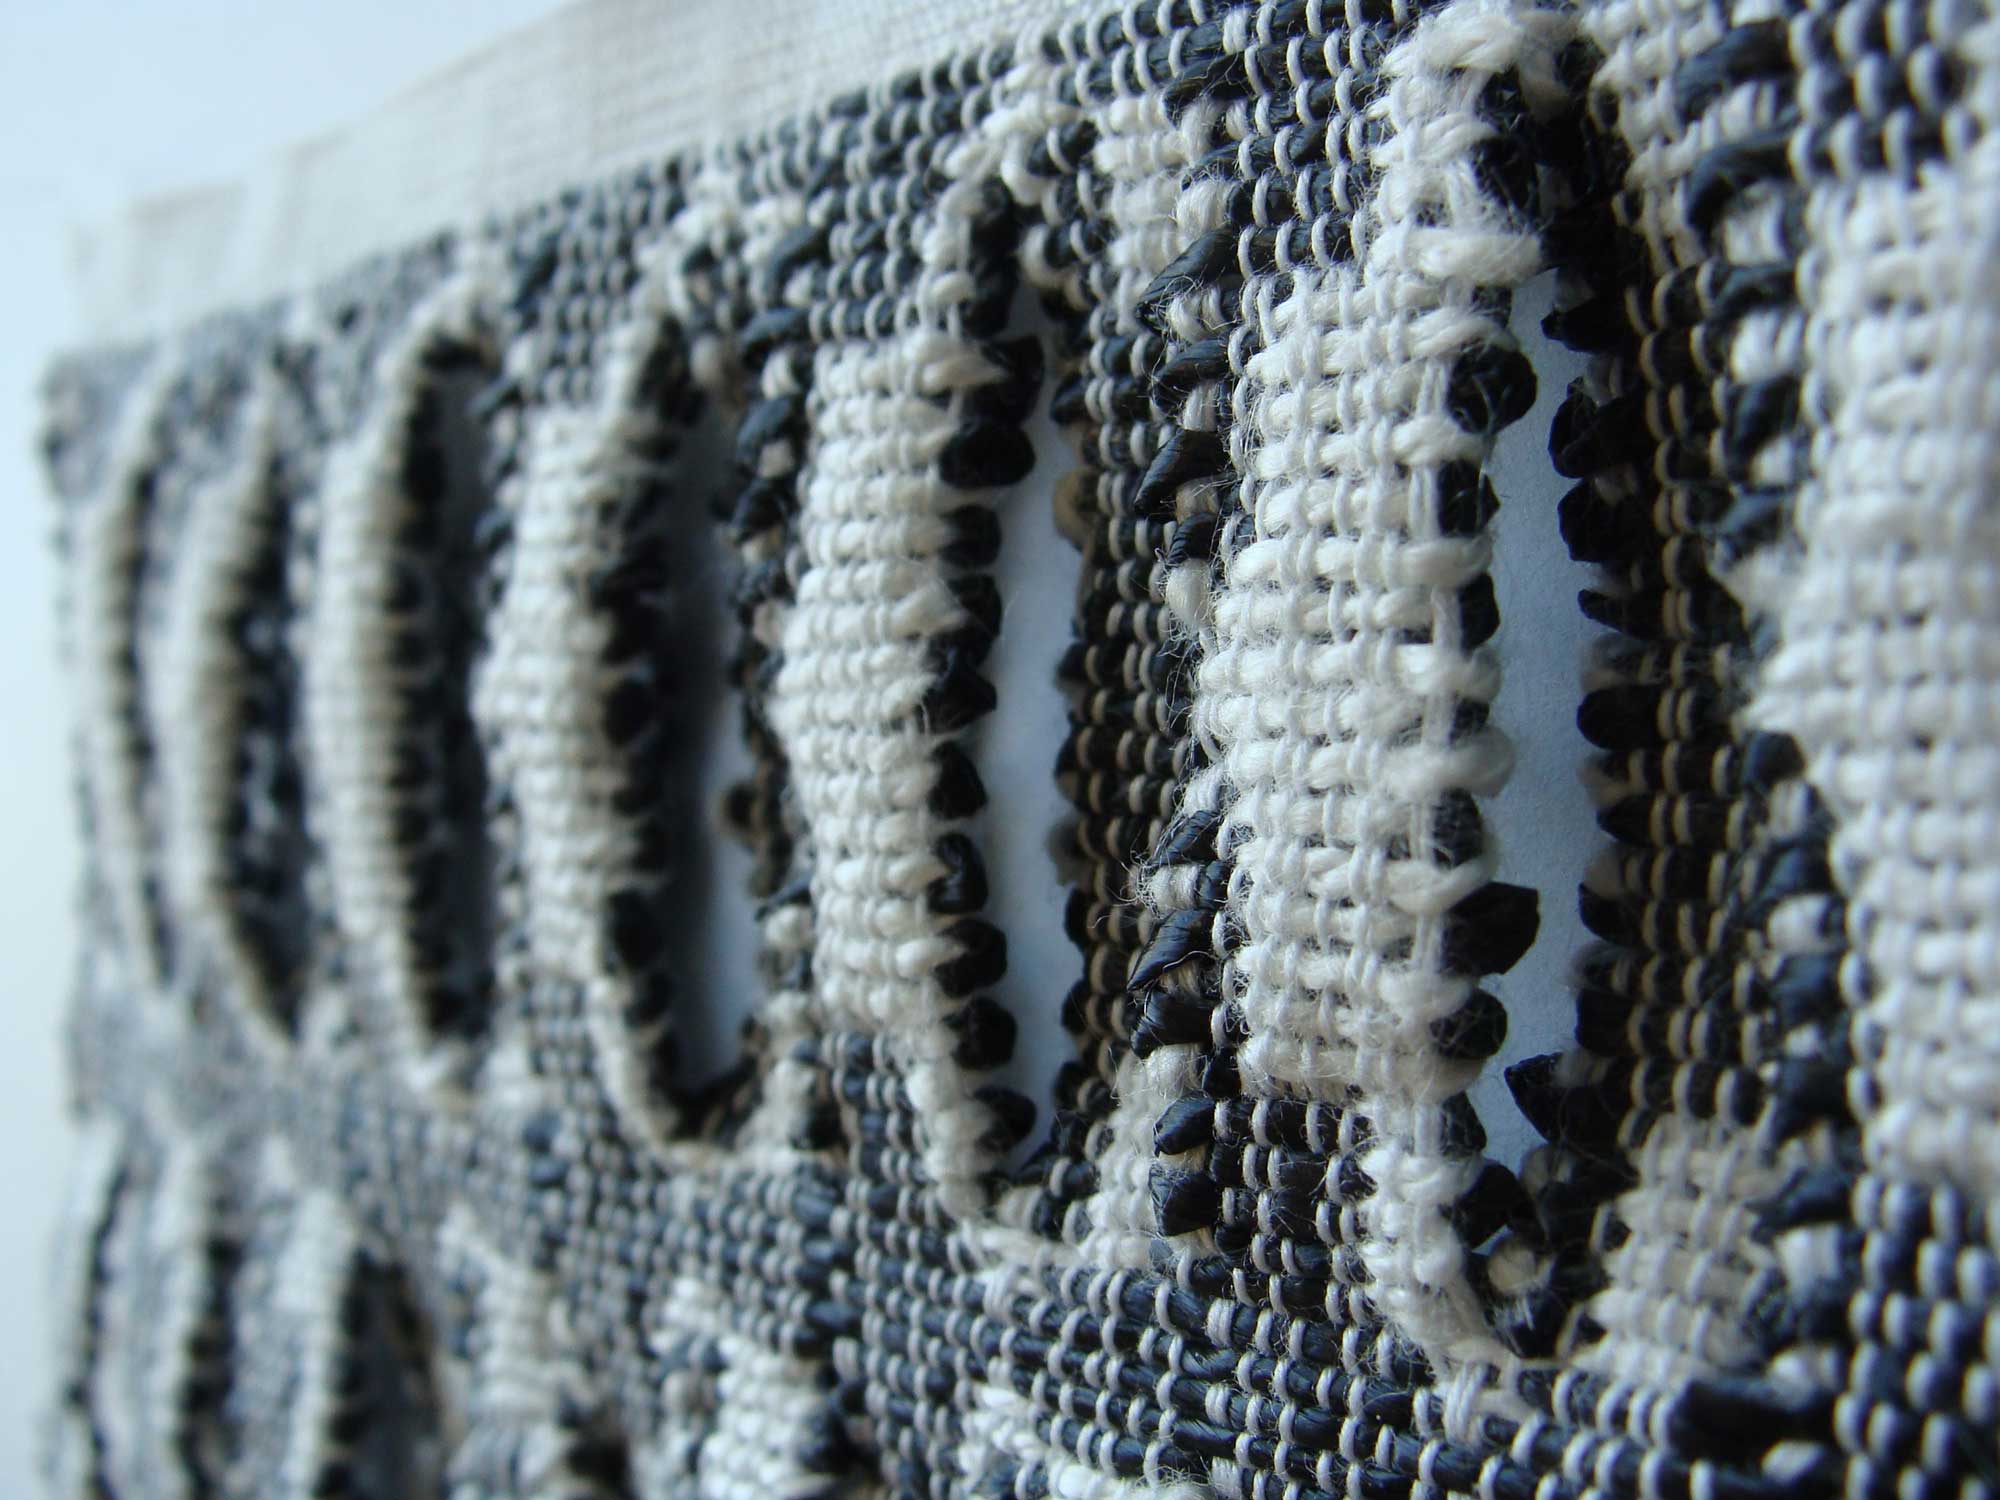 Alhambra - Coton - 10 x 15 cm - 2014
